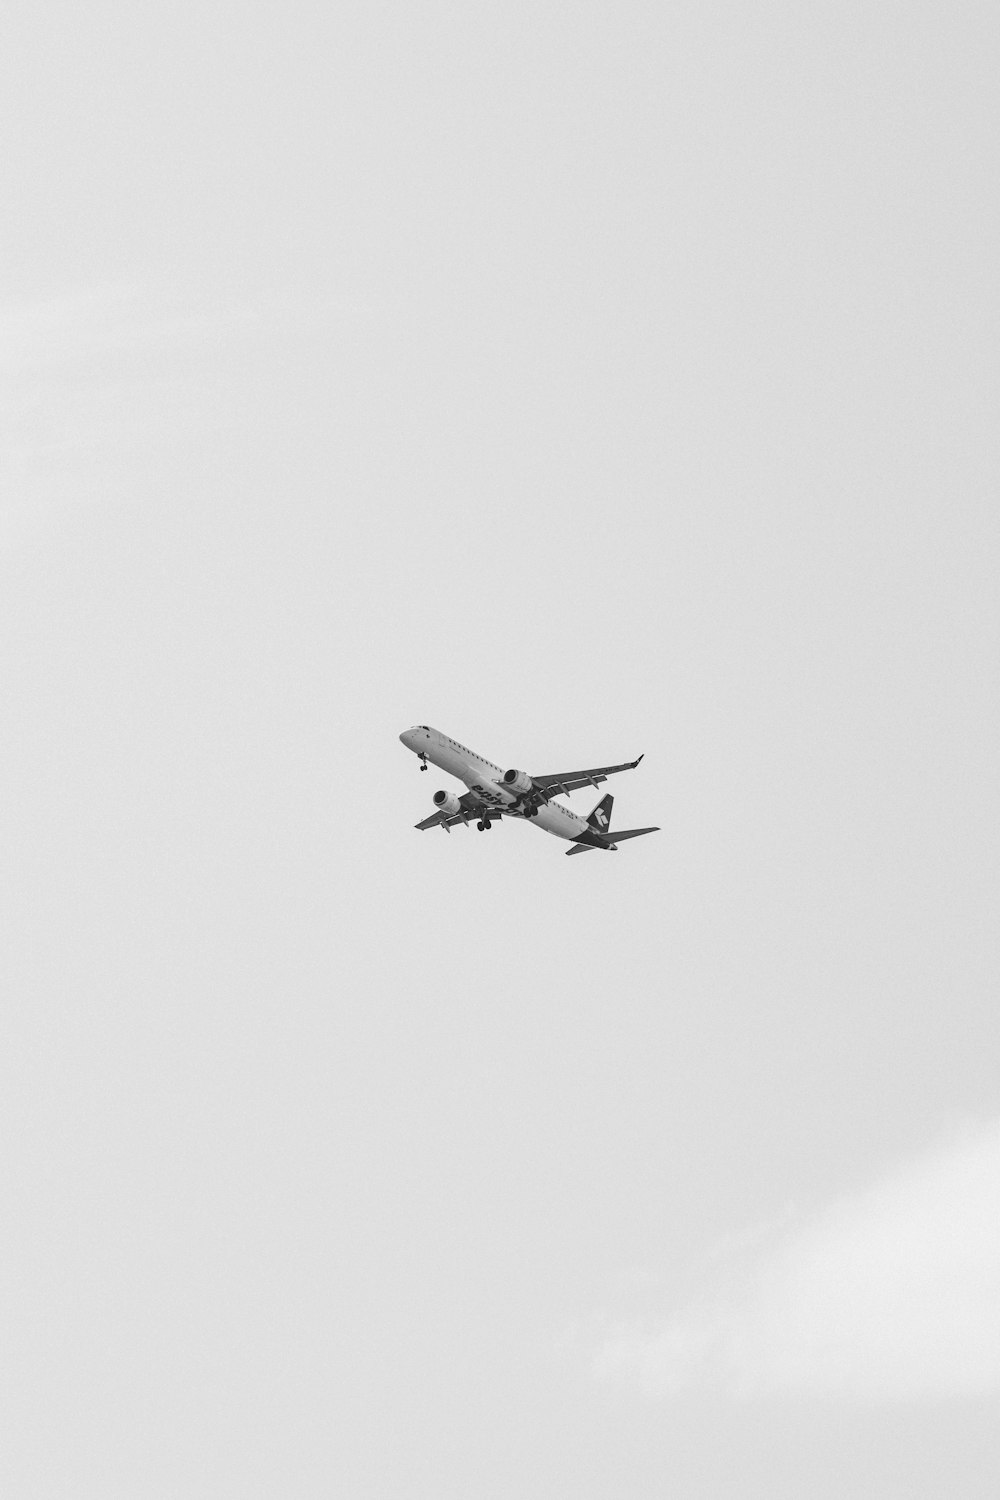 Fotografía time-lapse de un avión en vuelo